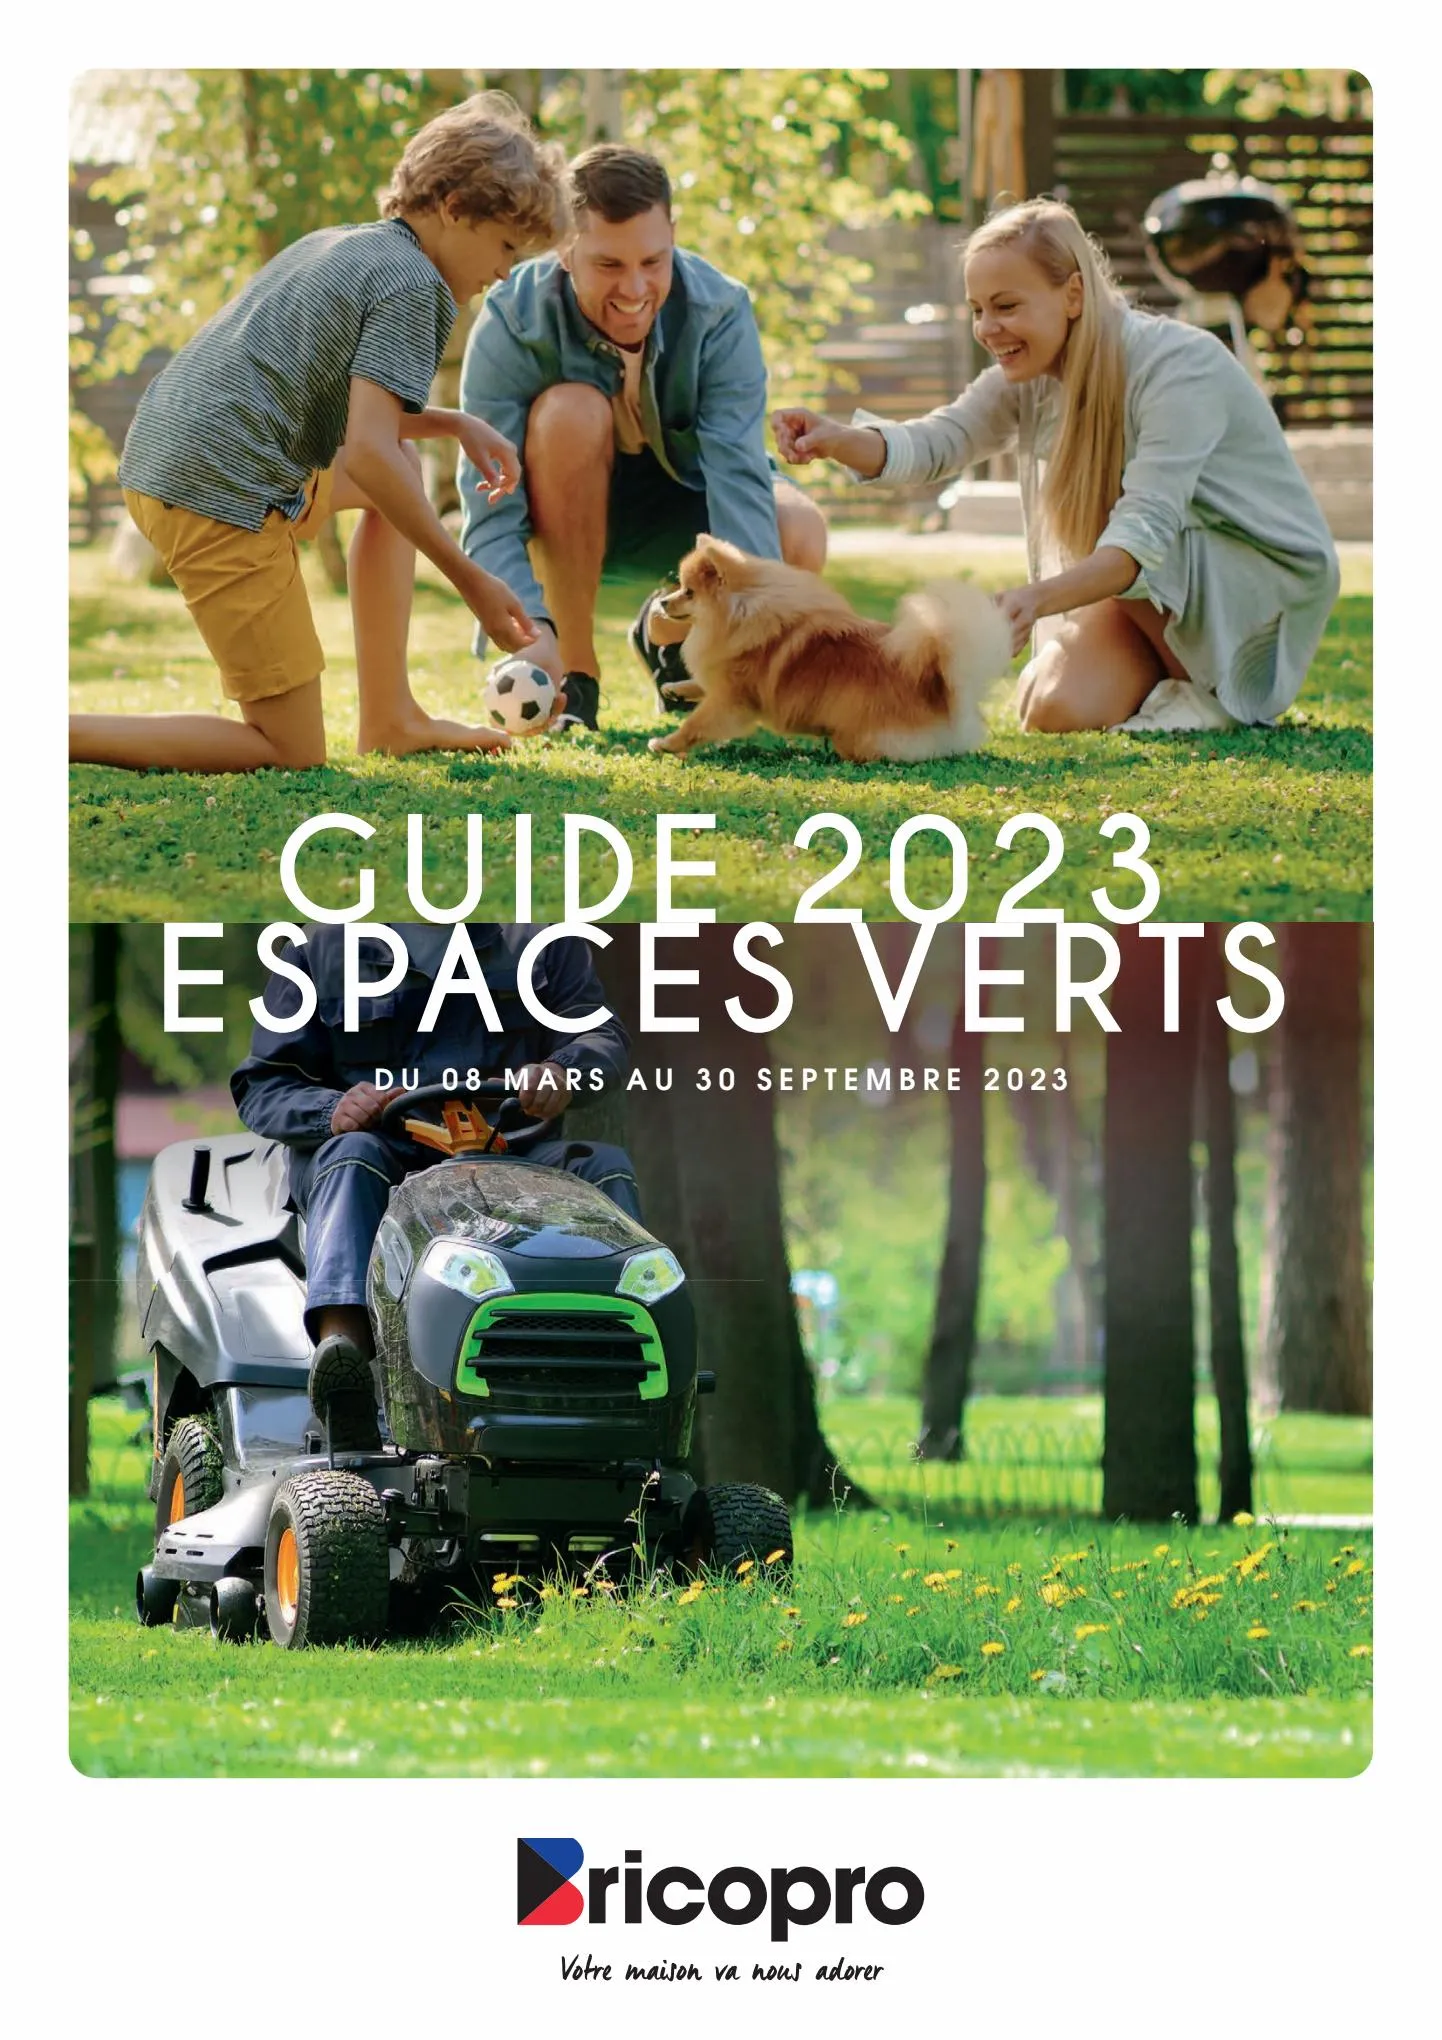 Catalogue Guide espaces verts 2023, page 00001